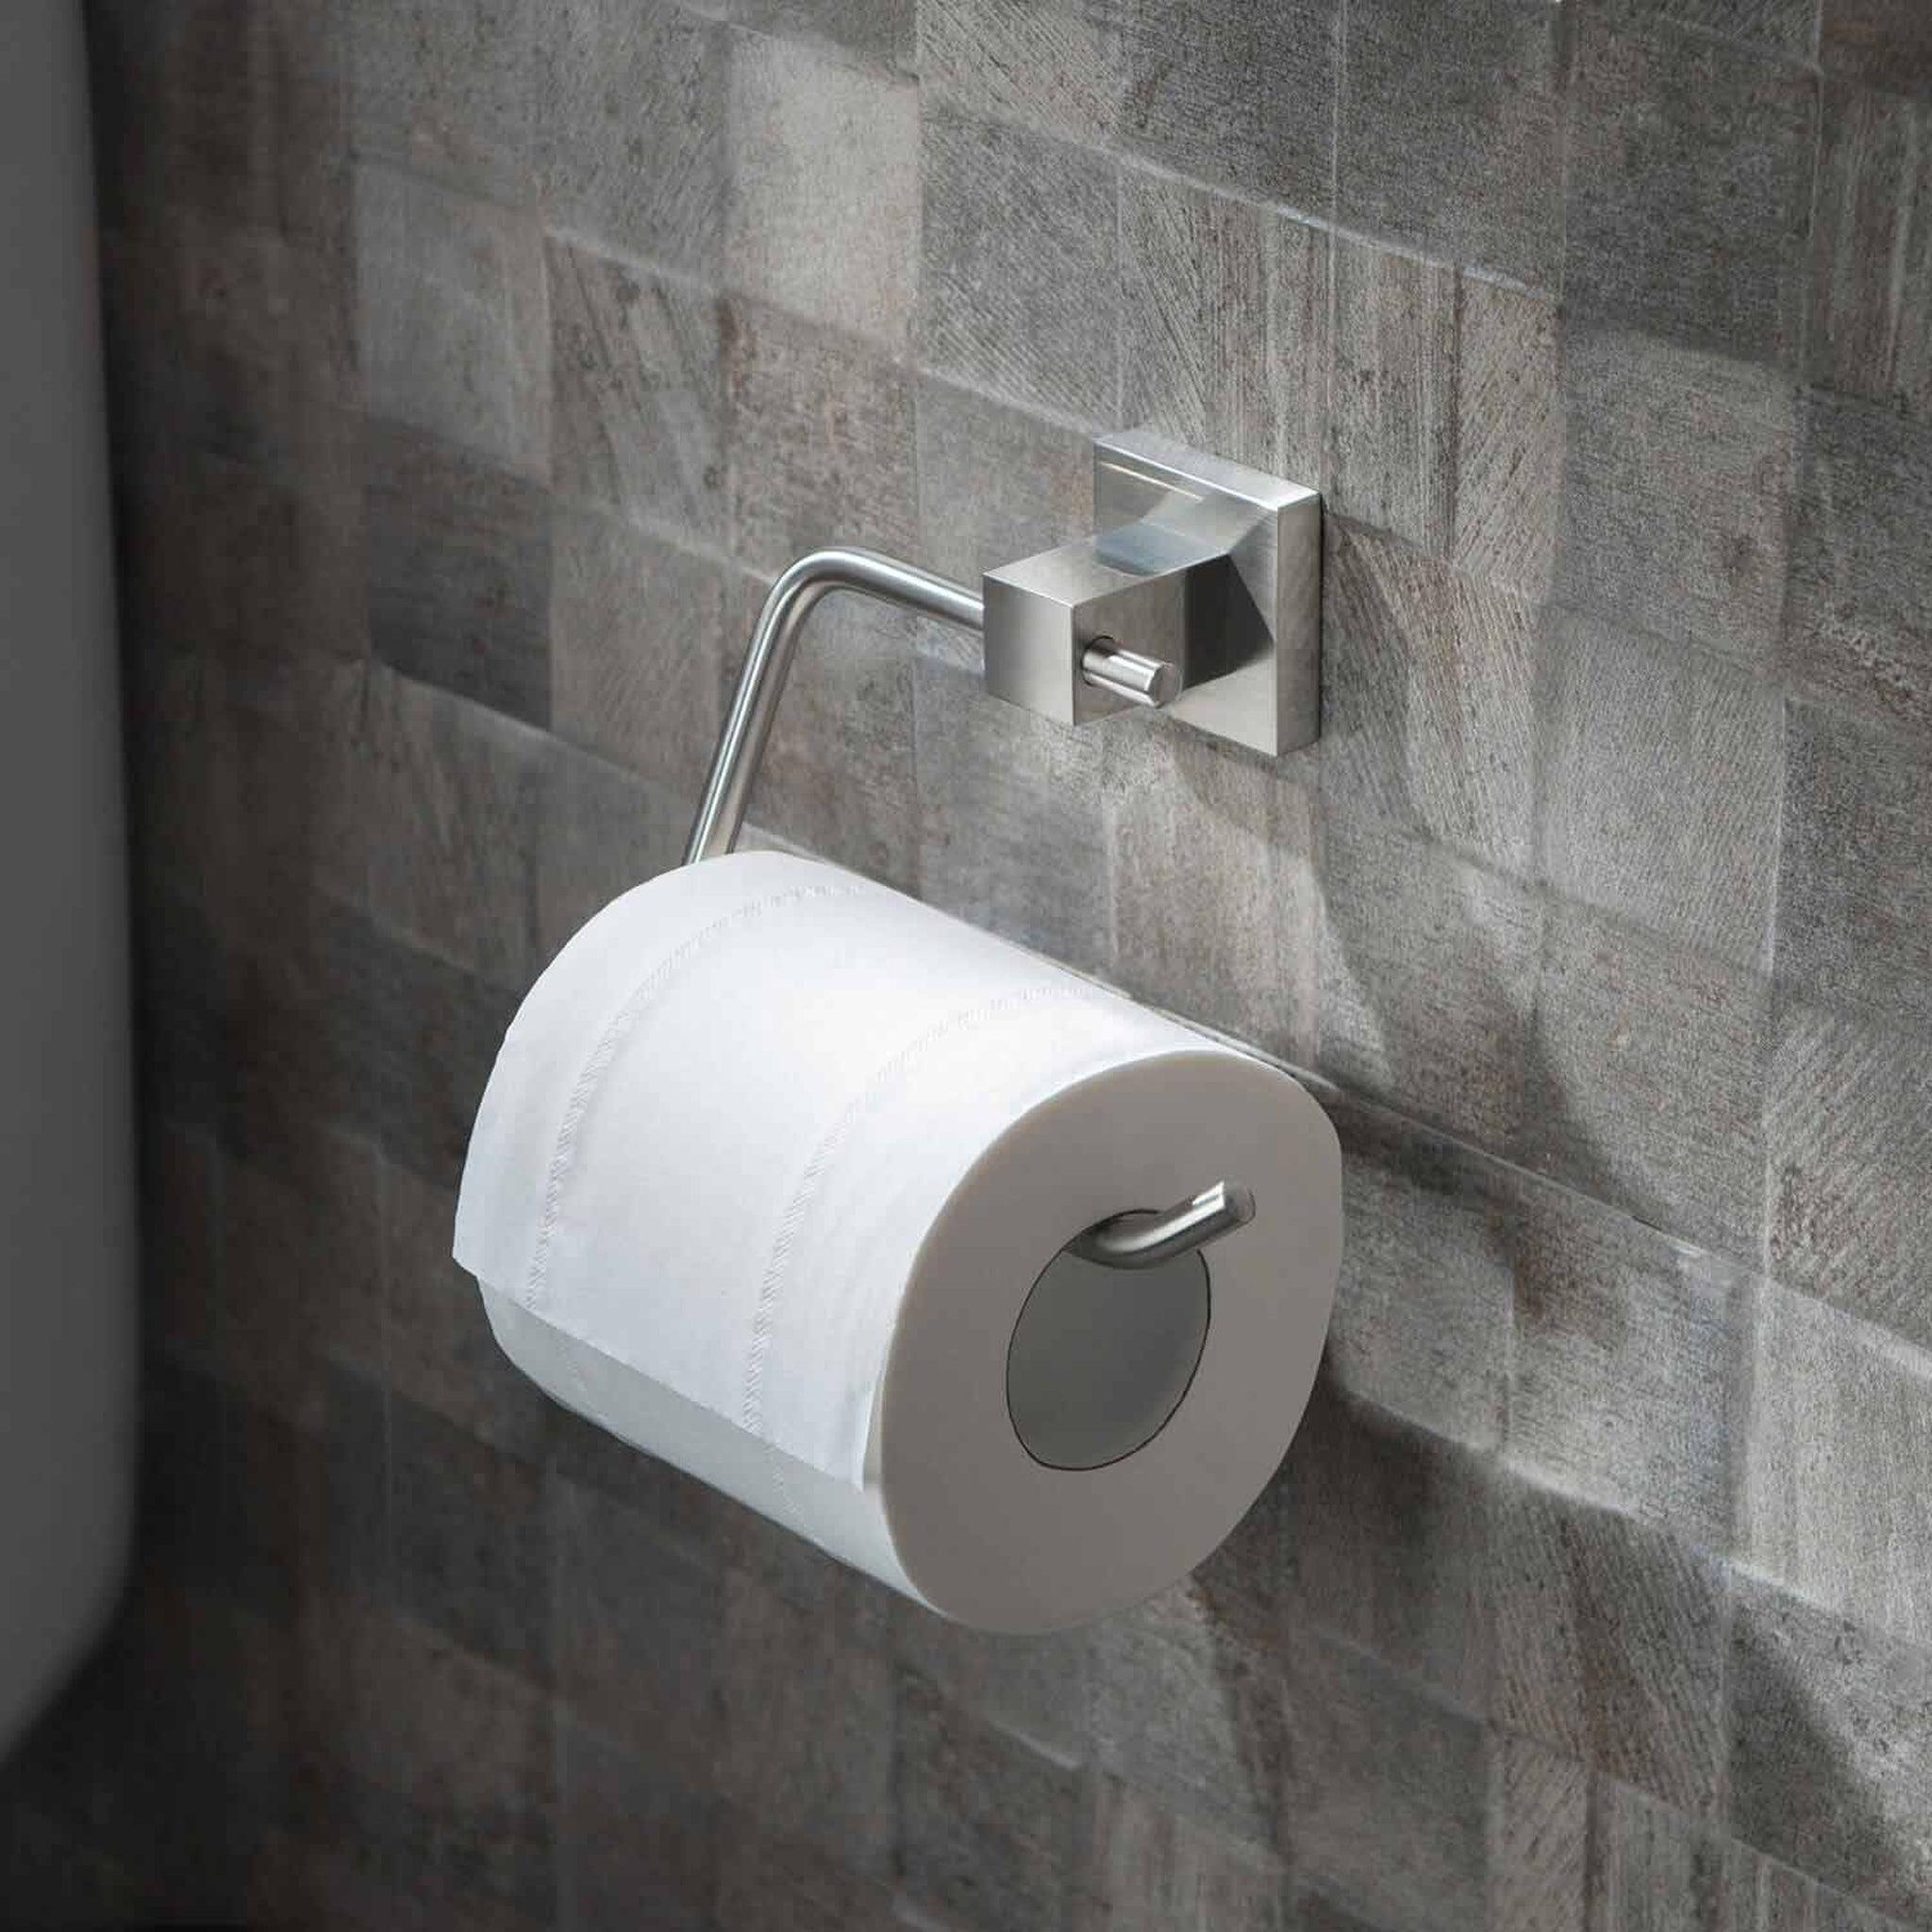 KIBI, KIBI Cube Brass Bathroom Toilet Paper Holder in Brushed Nickel Finish